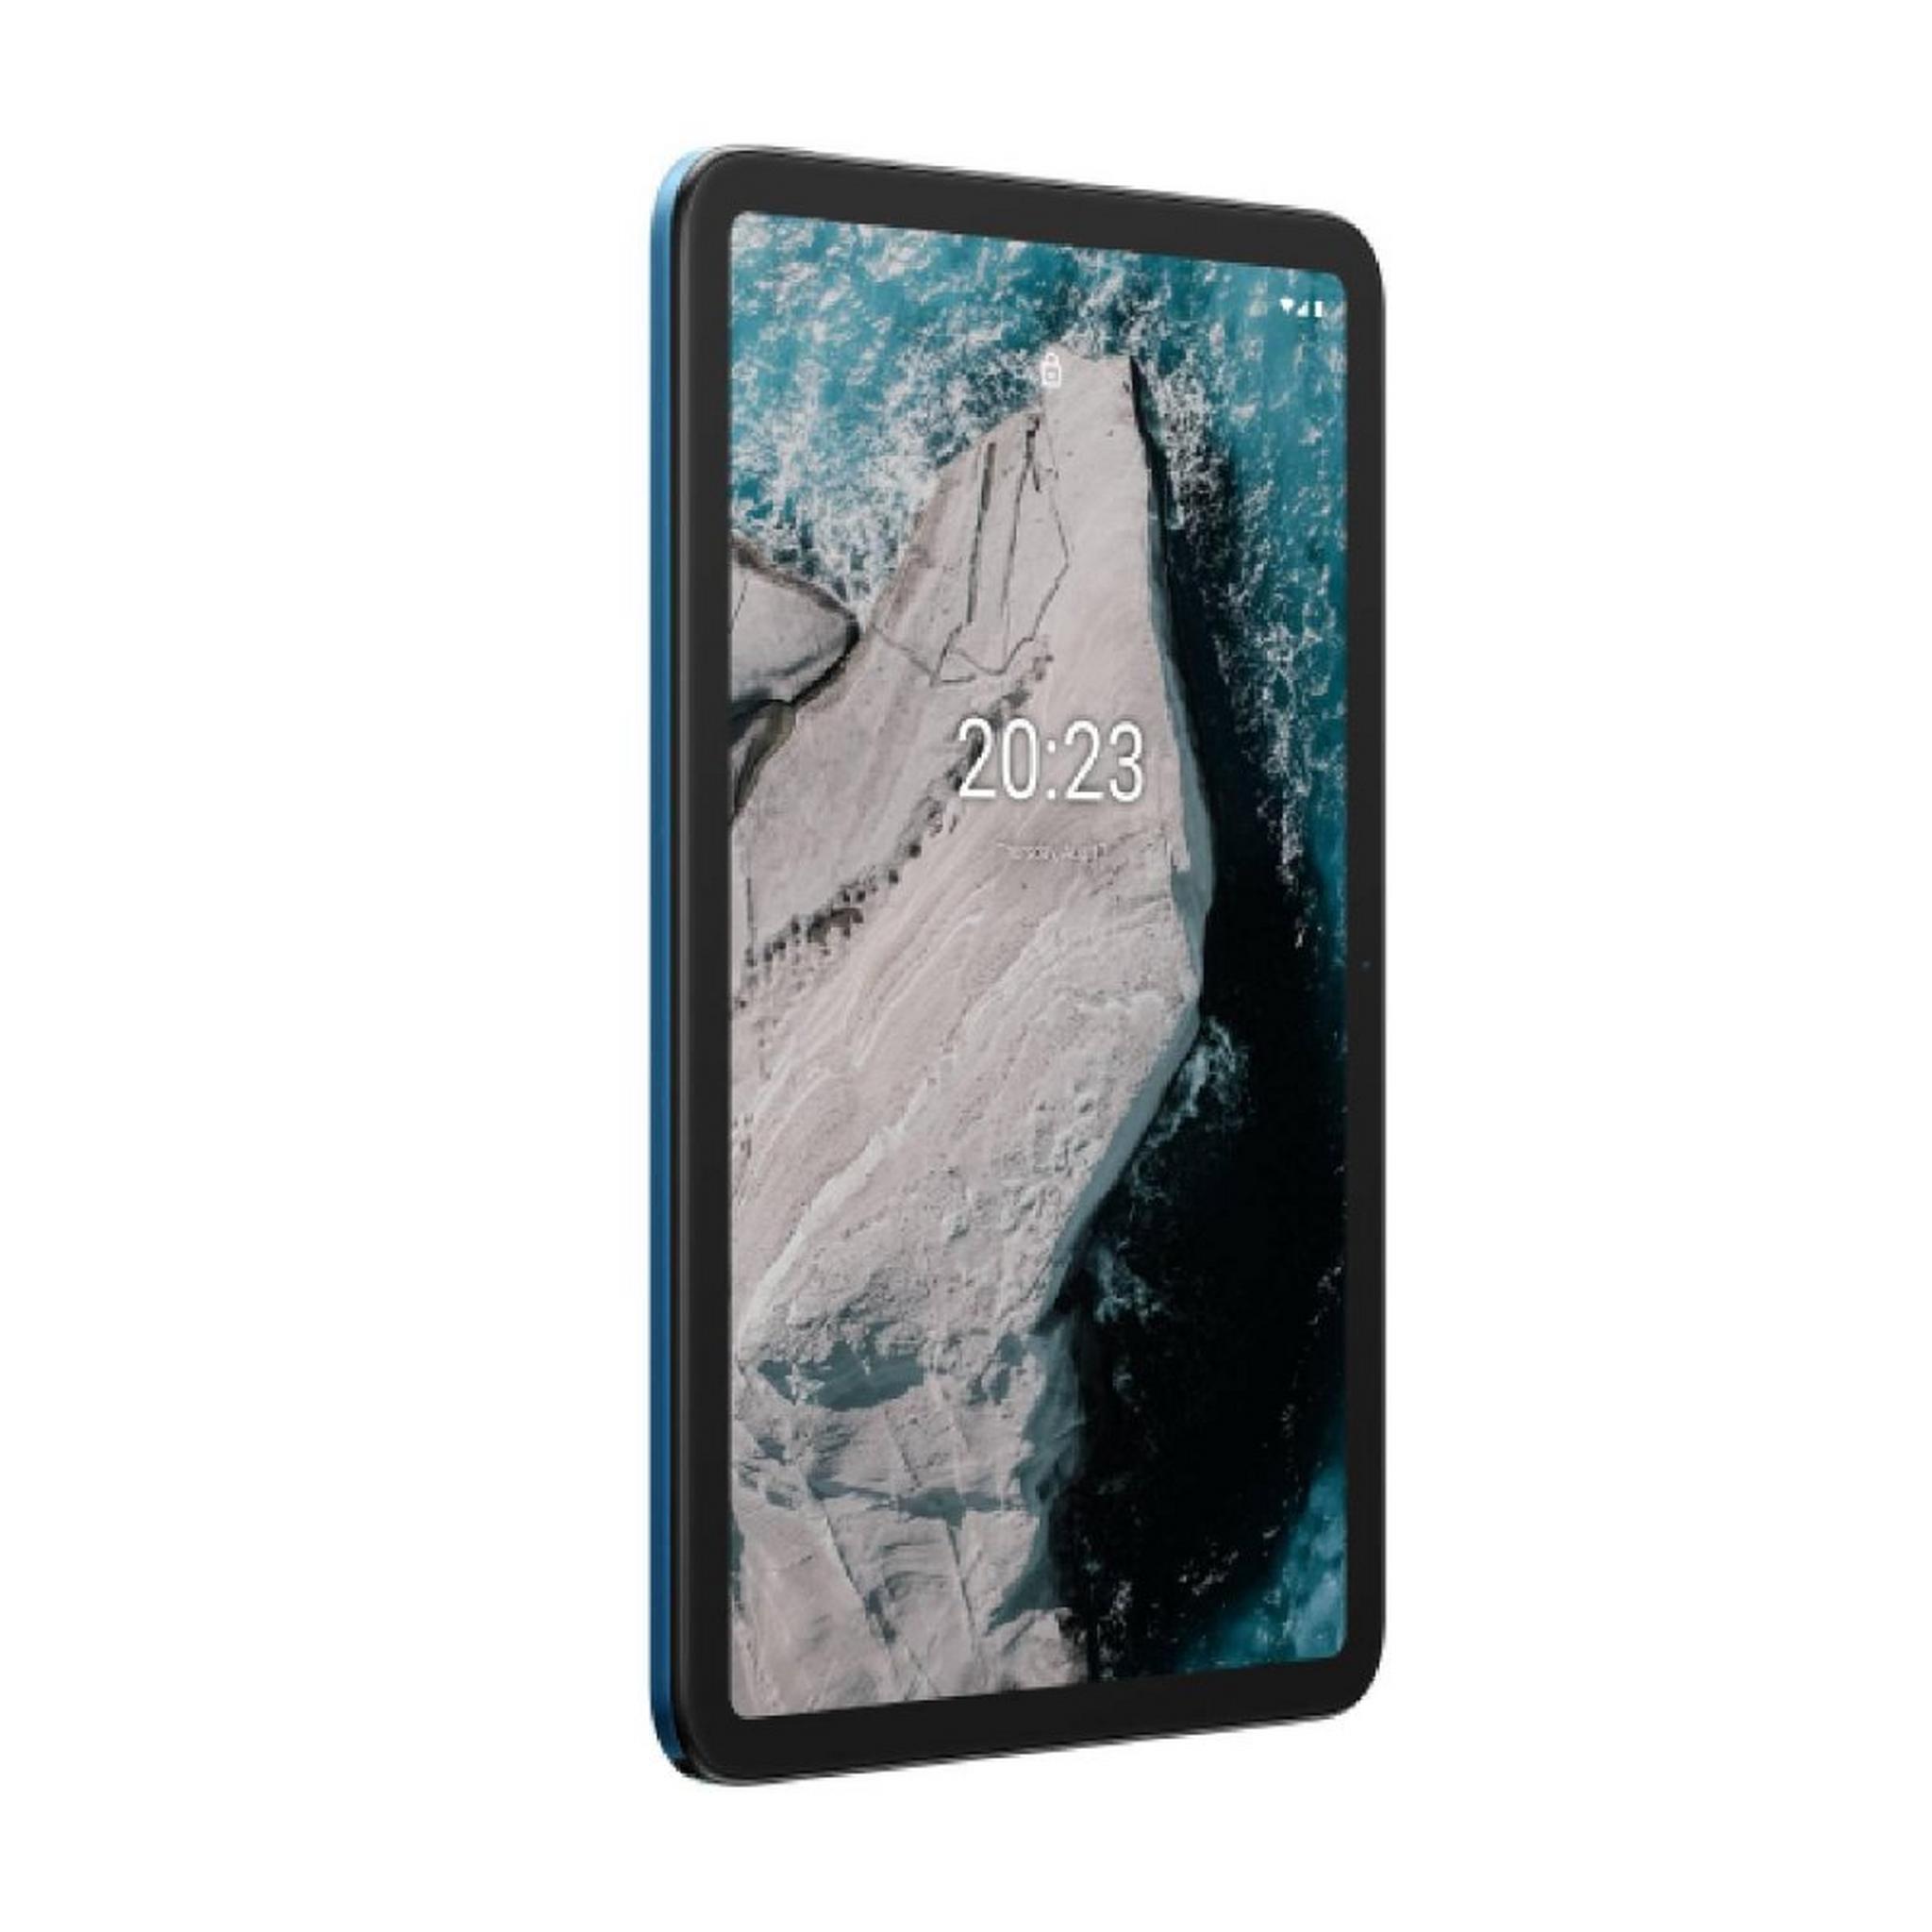 NOKIA T20 Tablet, 10.4-inch, 4GB RAM, 64GB, LTE, NOKIA T20-LTE – Ocean Blue